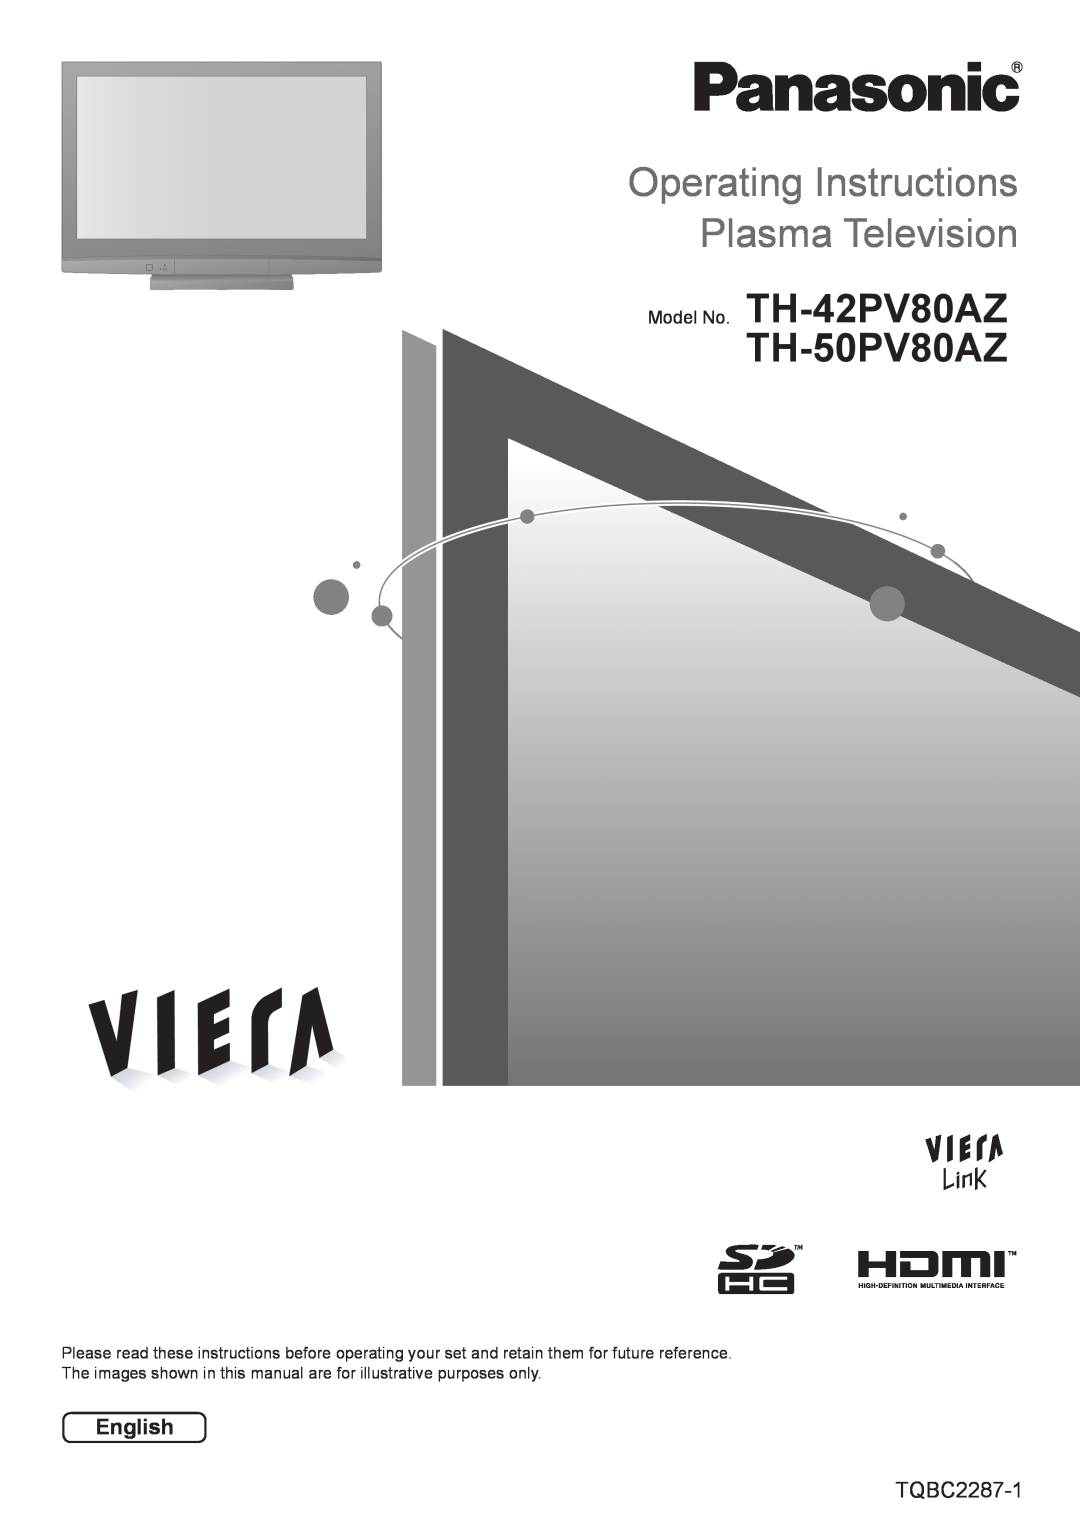 Panasonic manual Operating Instructions Plasma Television, Model No. TH-42PV80AZ TH-50PV80AZ, English, TQBC2287-1 